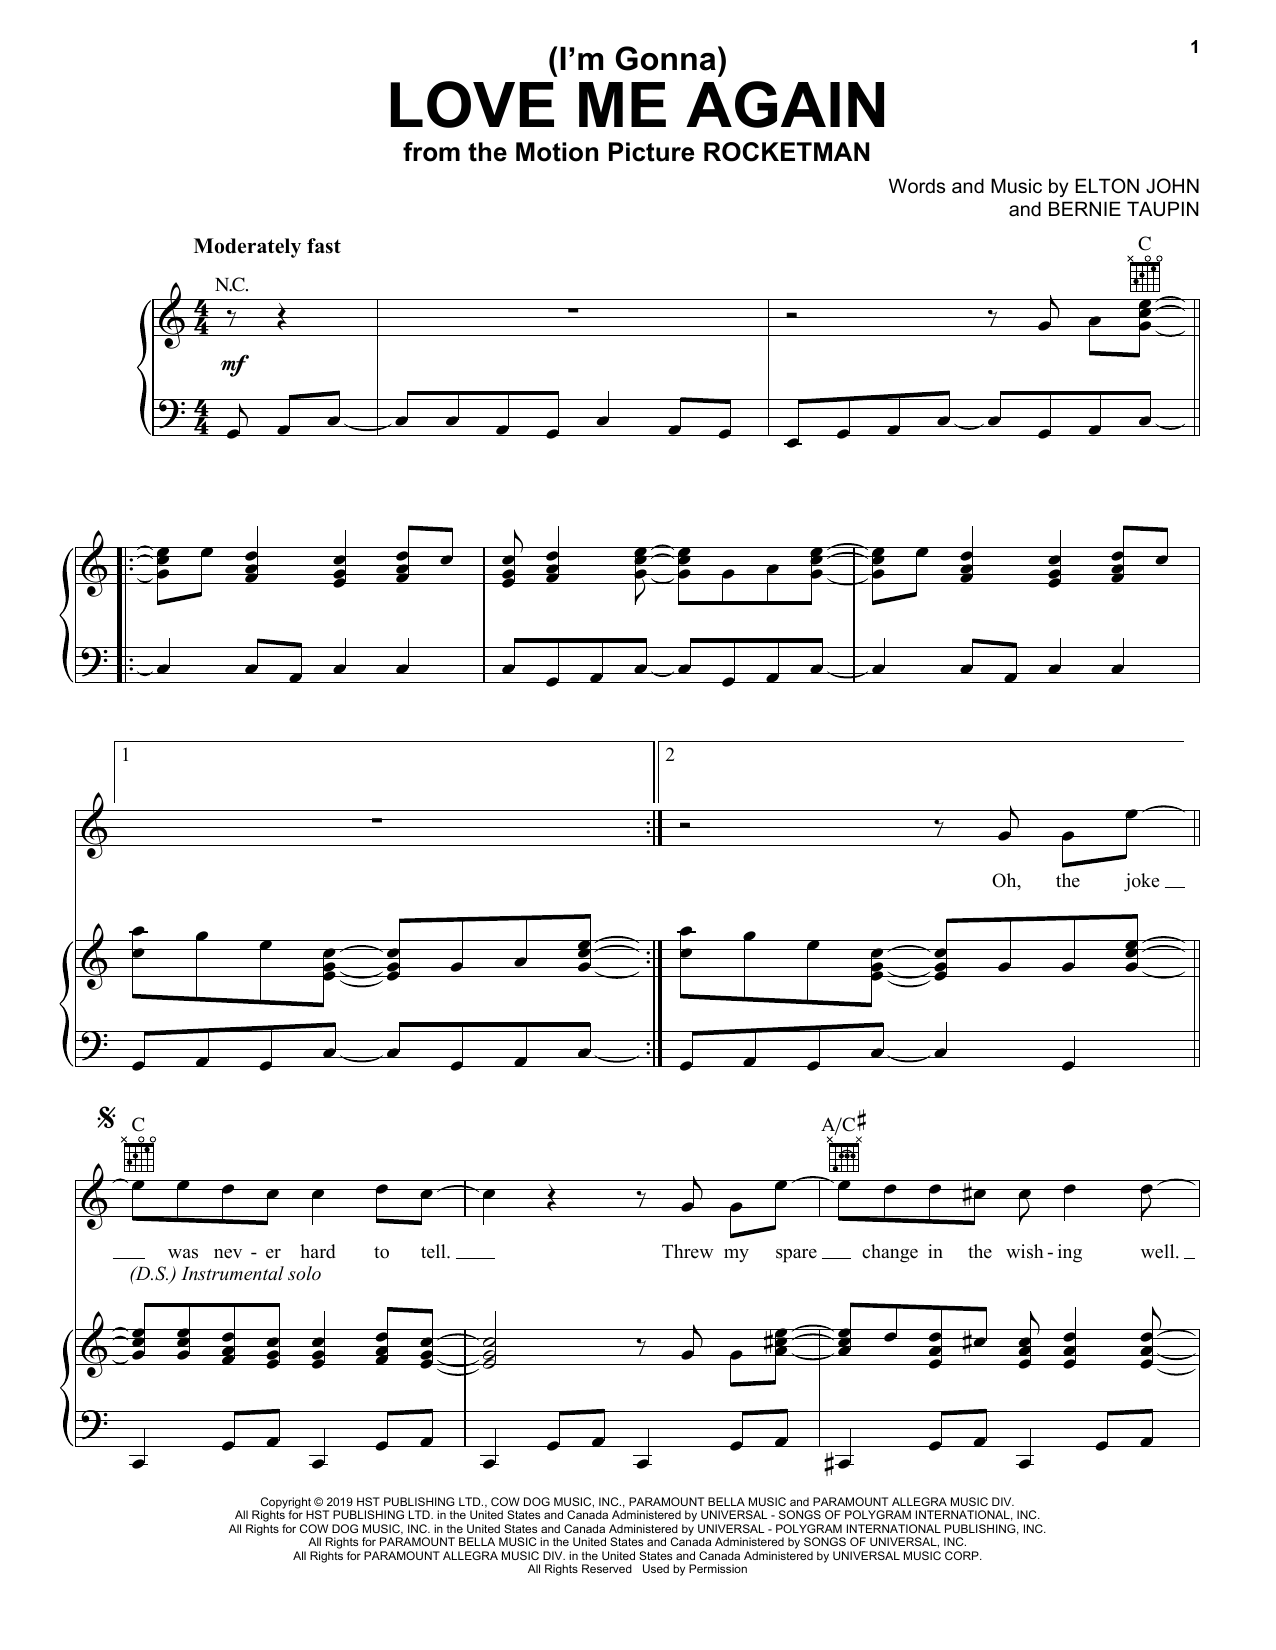 Elton John & Taron Egerton (I'm Gonna) Love Me Again (from Rocketman) Sheet Music Notes & Chords for Easy Piano - Download or Print PDF